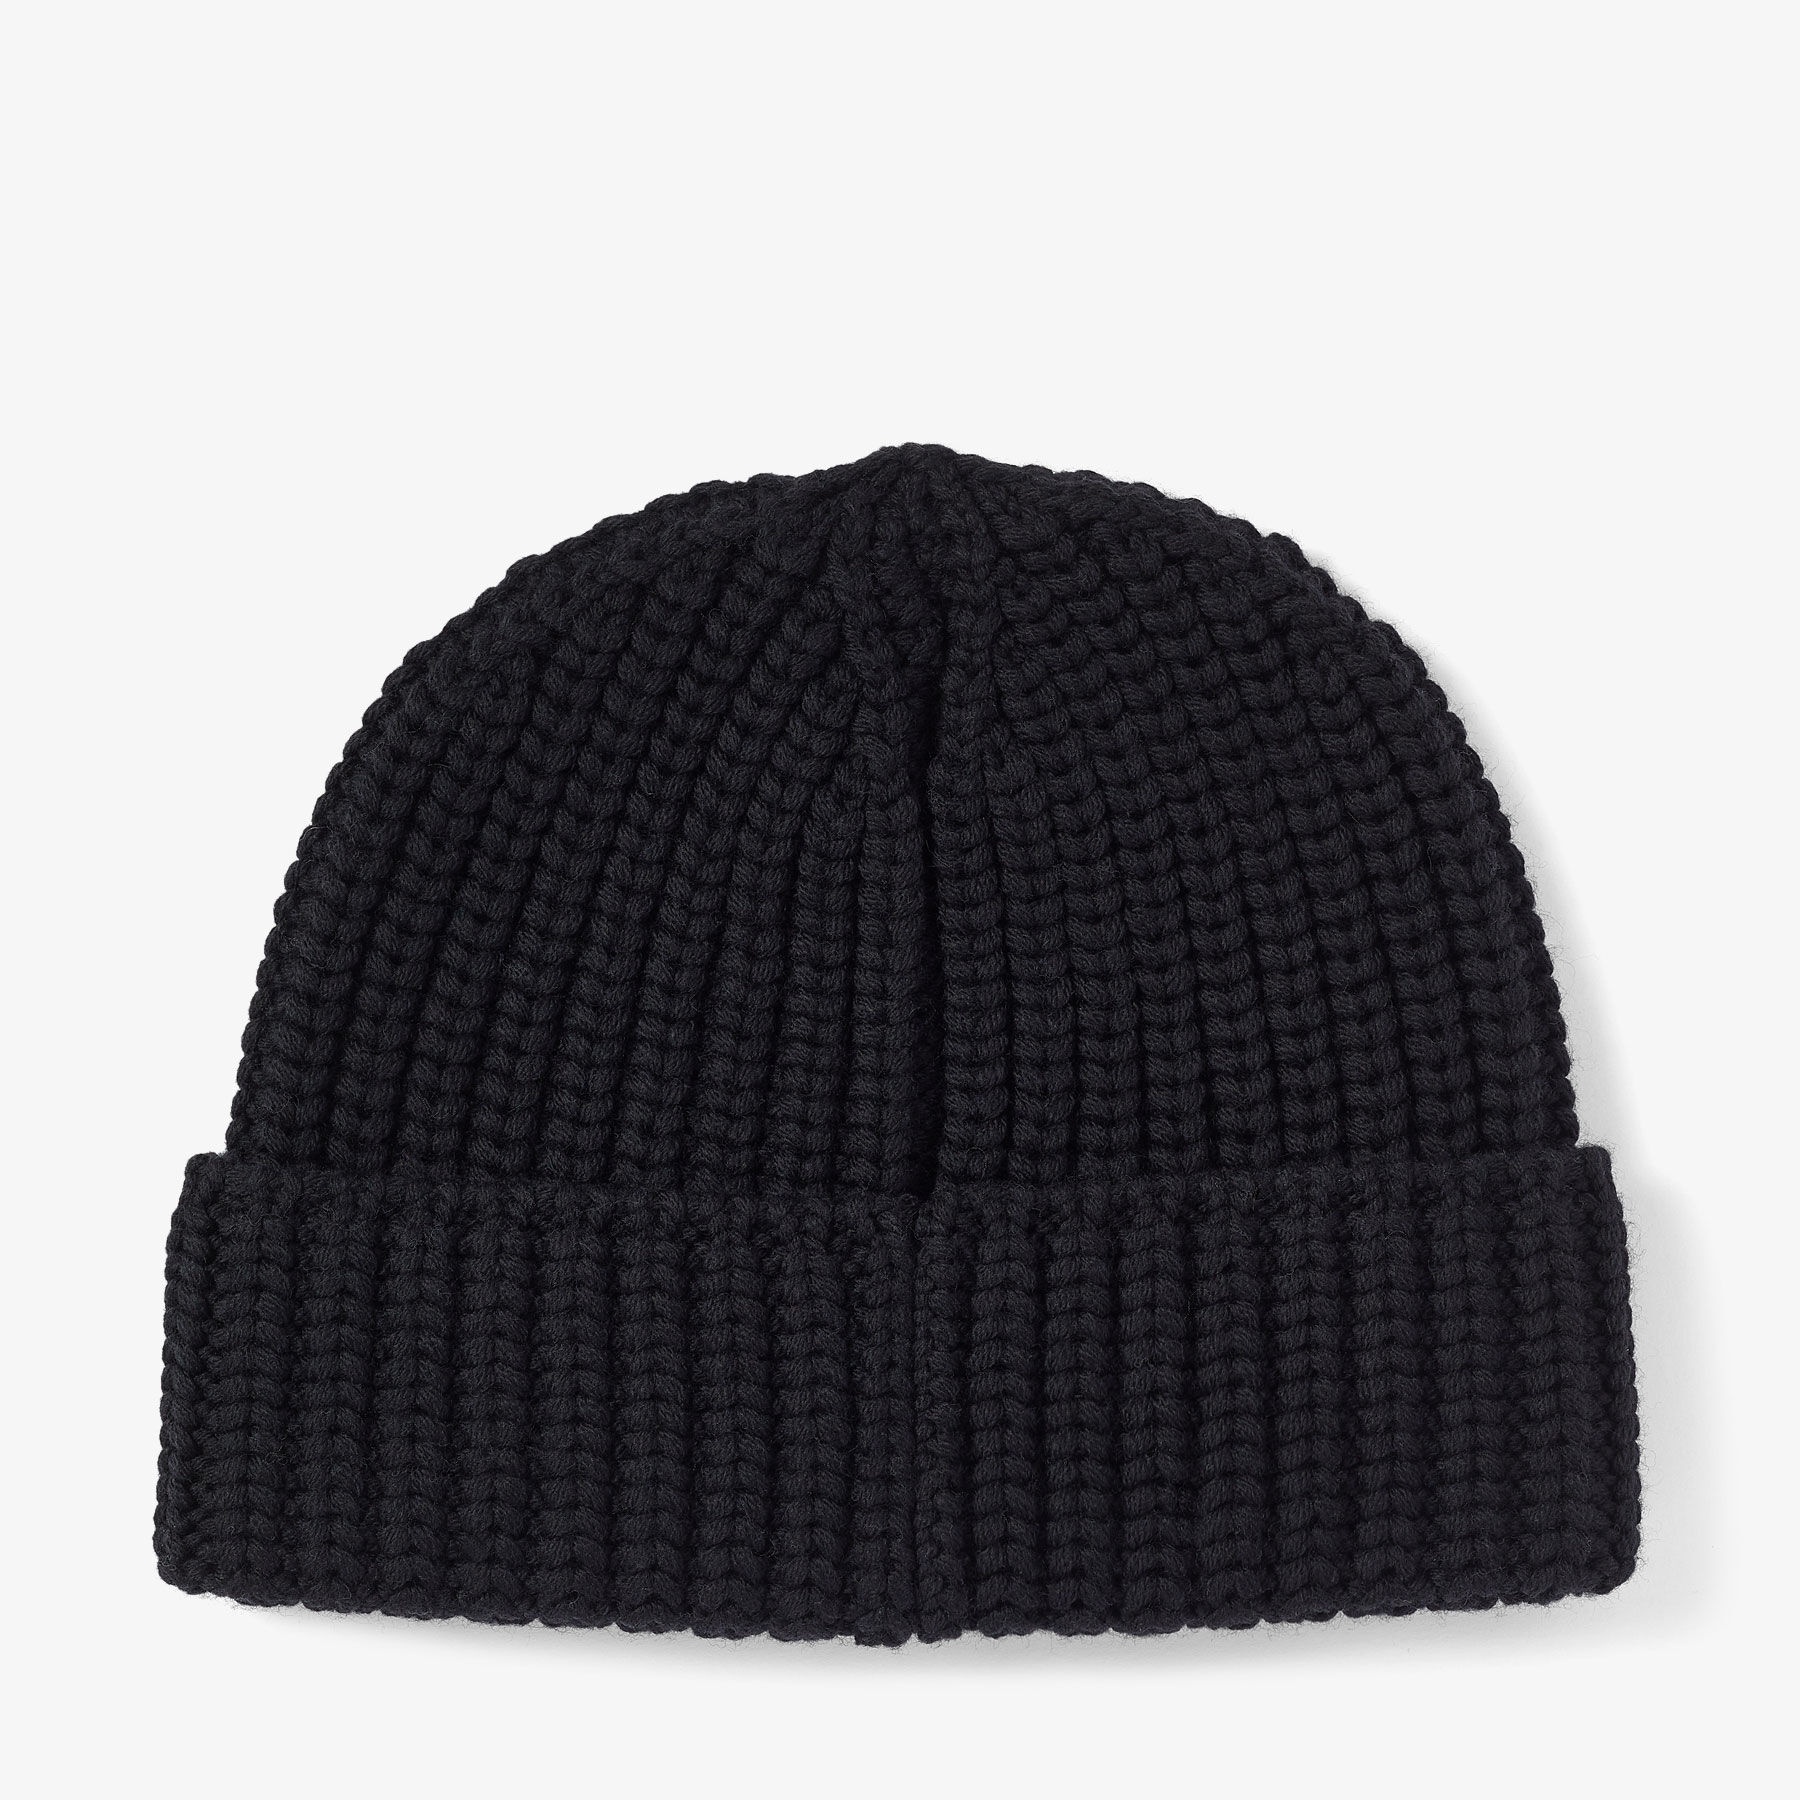 Yuki
Black Cashwool Knit Hat - 2